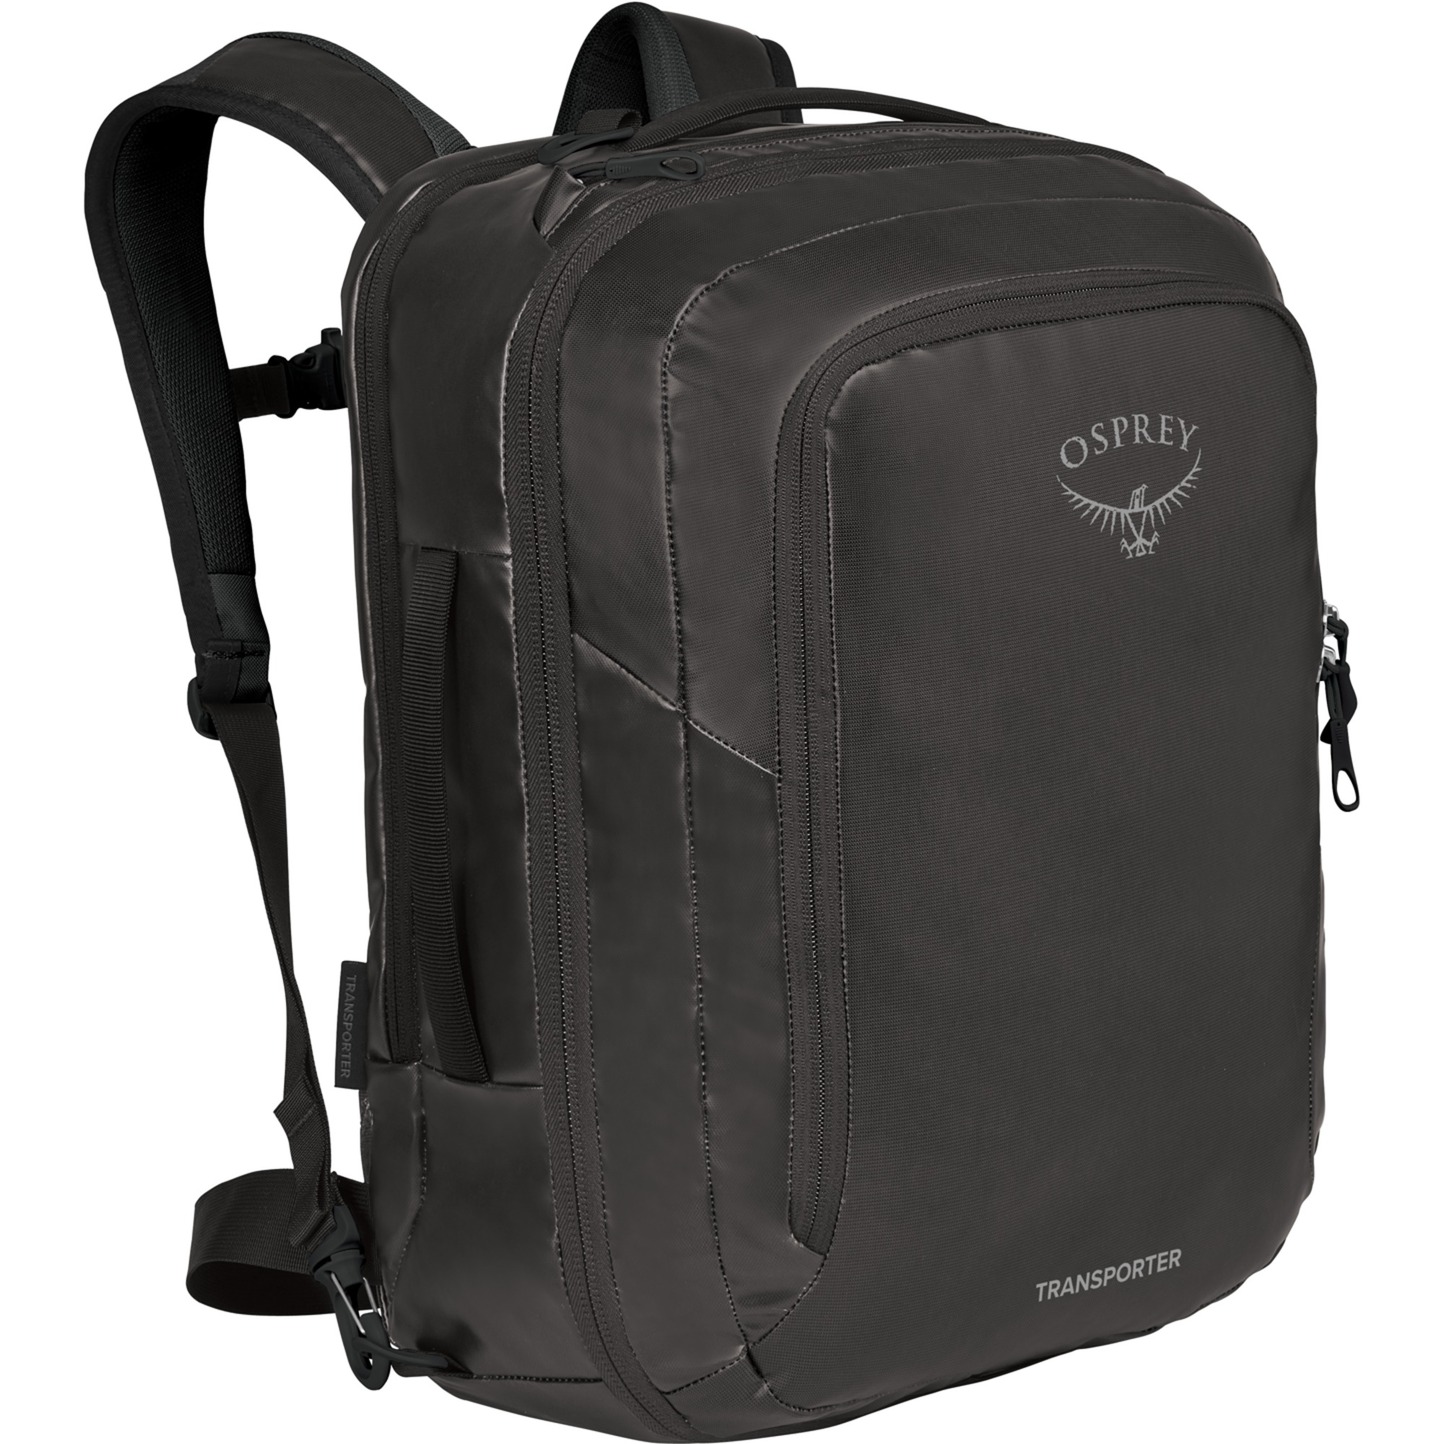 Transporter Global Carry-On Bag, Tasche von Osprey